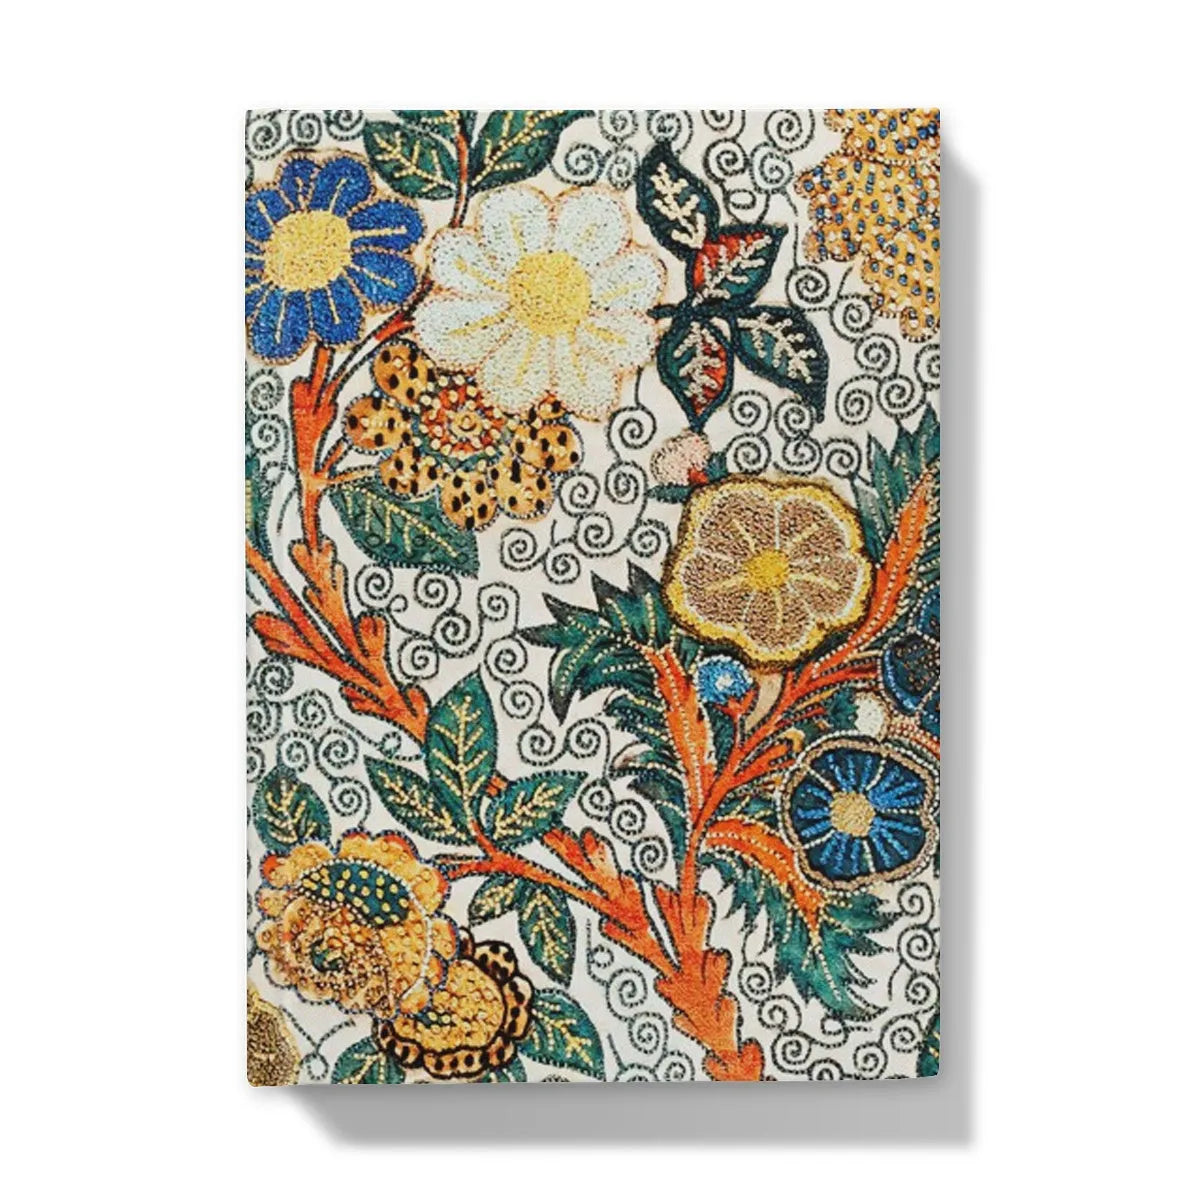 Blossomewhere Japanese Tapestry Art Hardback Journal - 5’x7’ / Lined - Notebooks & Notepads - Aesthetic Art